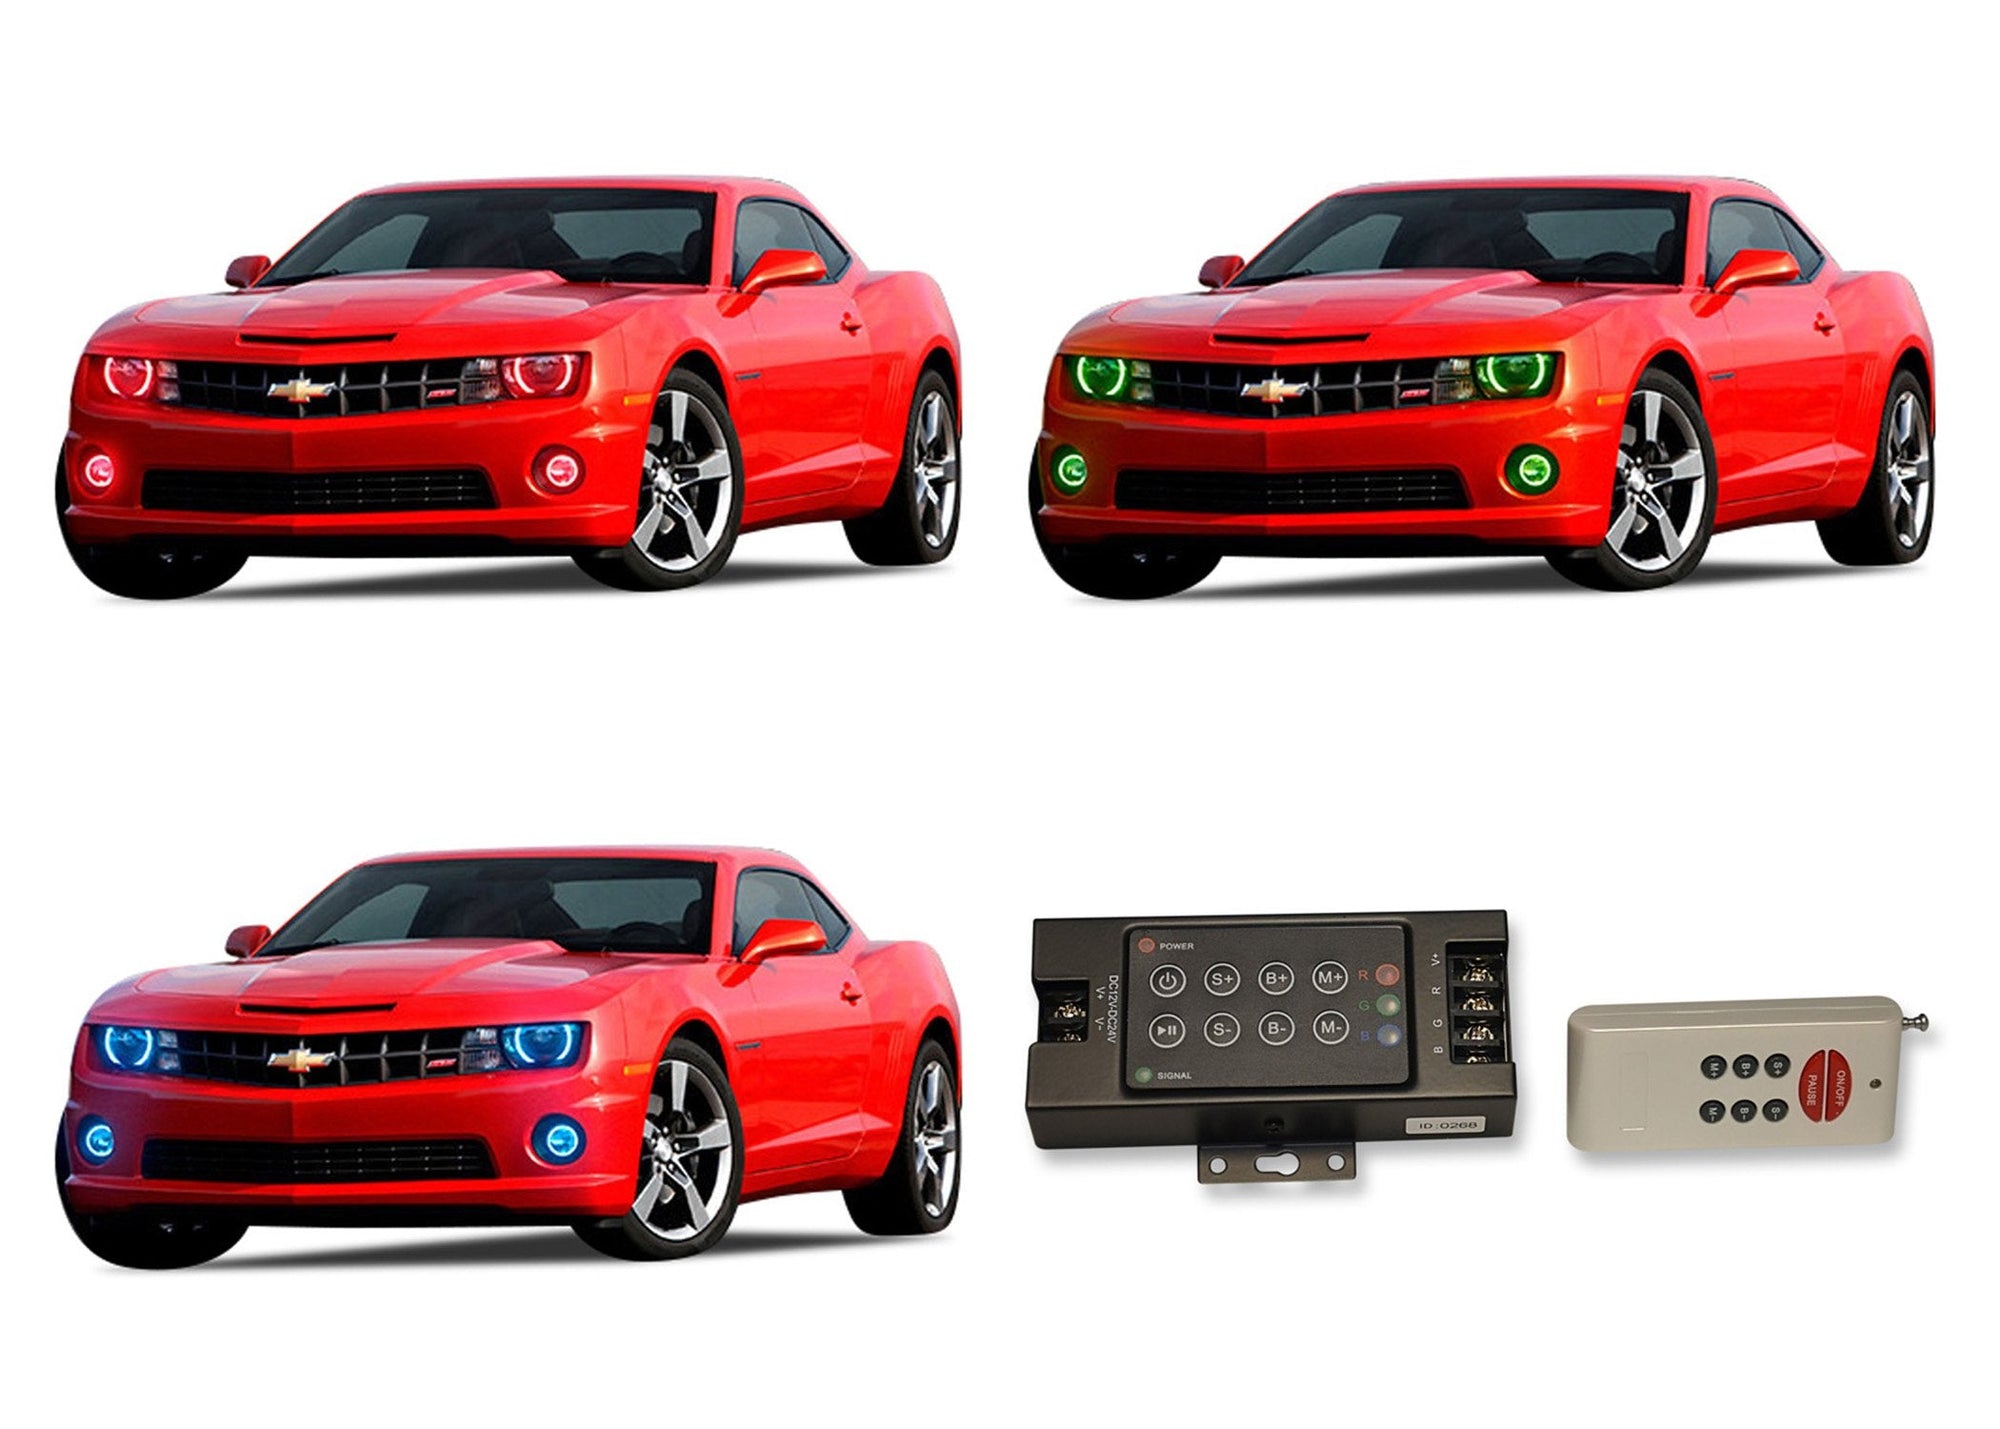 Chevrolet-Camaro-2010, 2011, 2012, 2013-LED-Halo-Headlights and Fog Lights-RGB-RF Remote-CY-CANR1013-V3HFRF